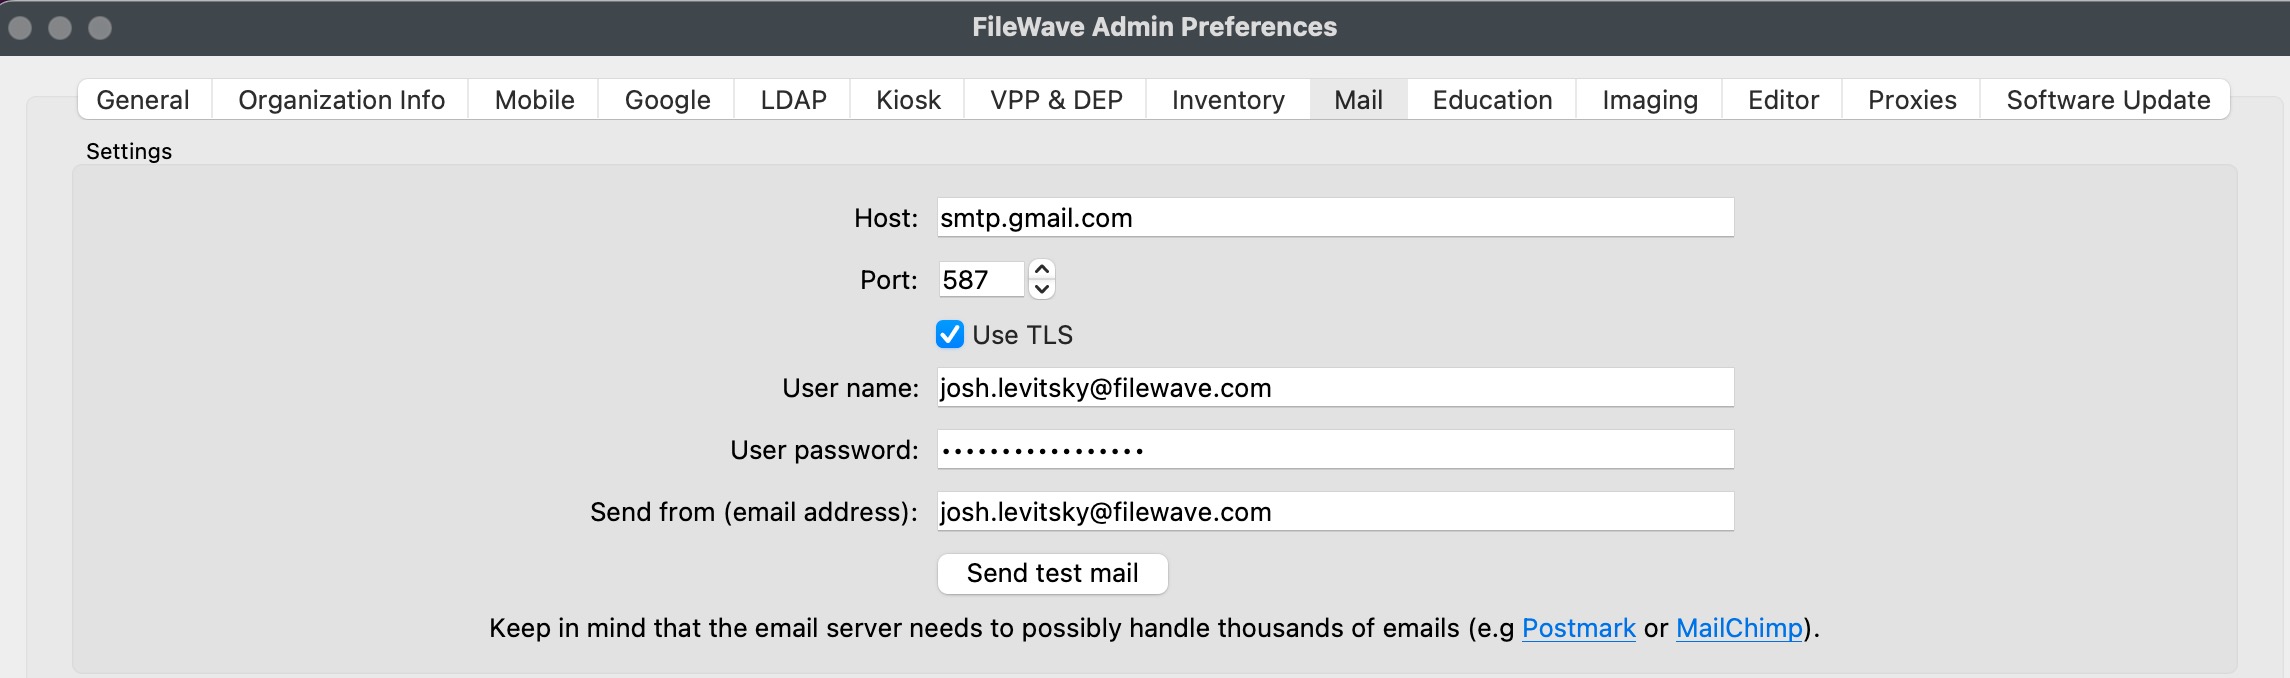 FileWave Admin Preferences 2022-11-02 at 9.43.50 AM-20221102-134352.jpg